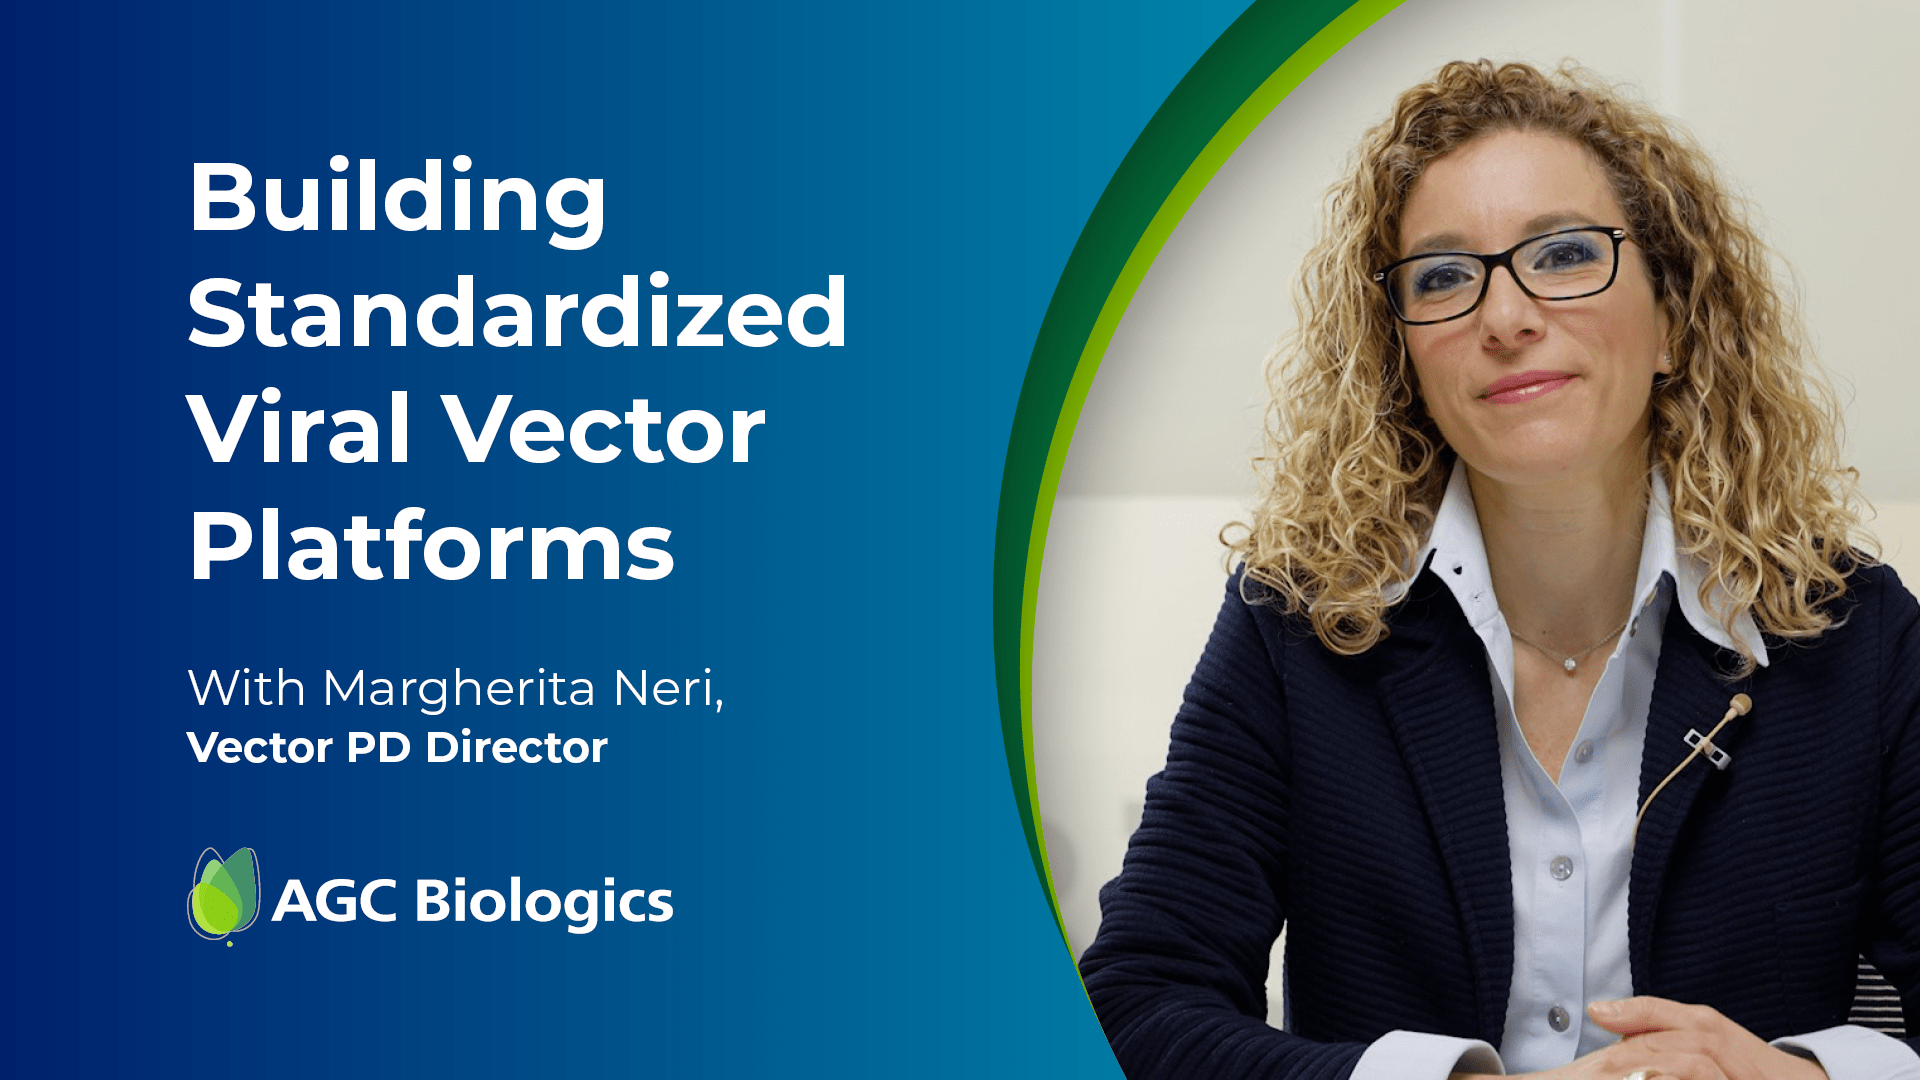 Building Standardized Viral Vector Platforms with Margherita Neri